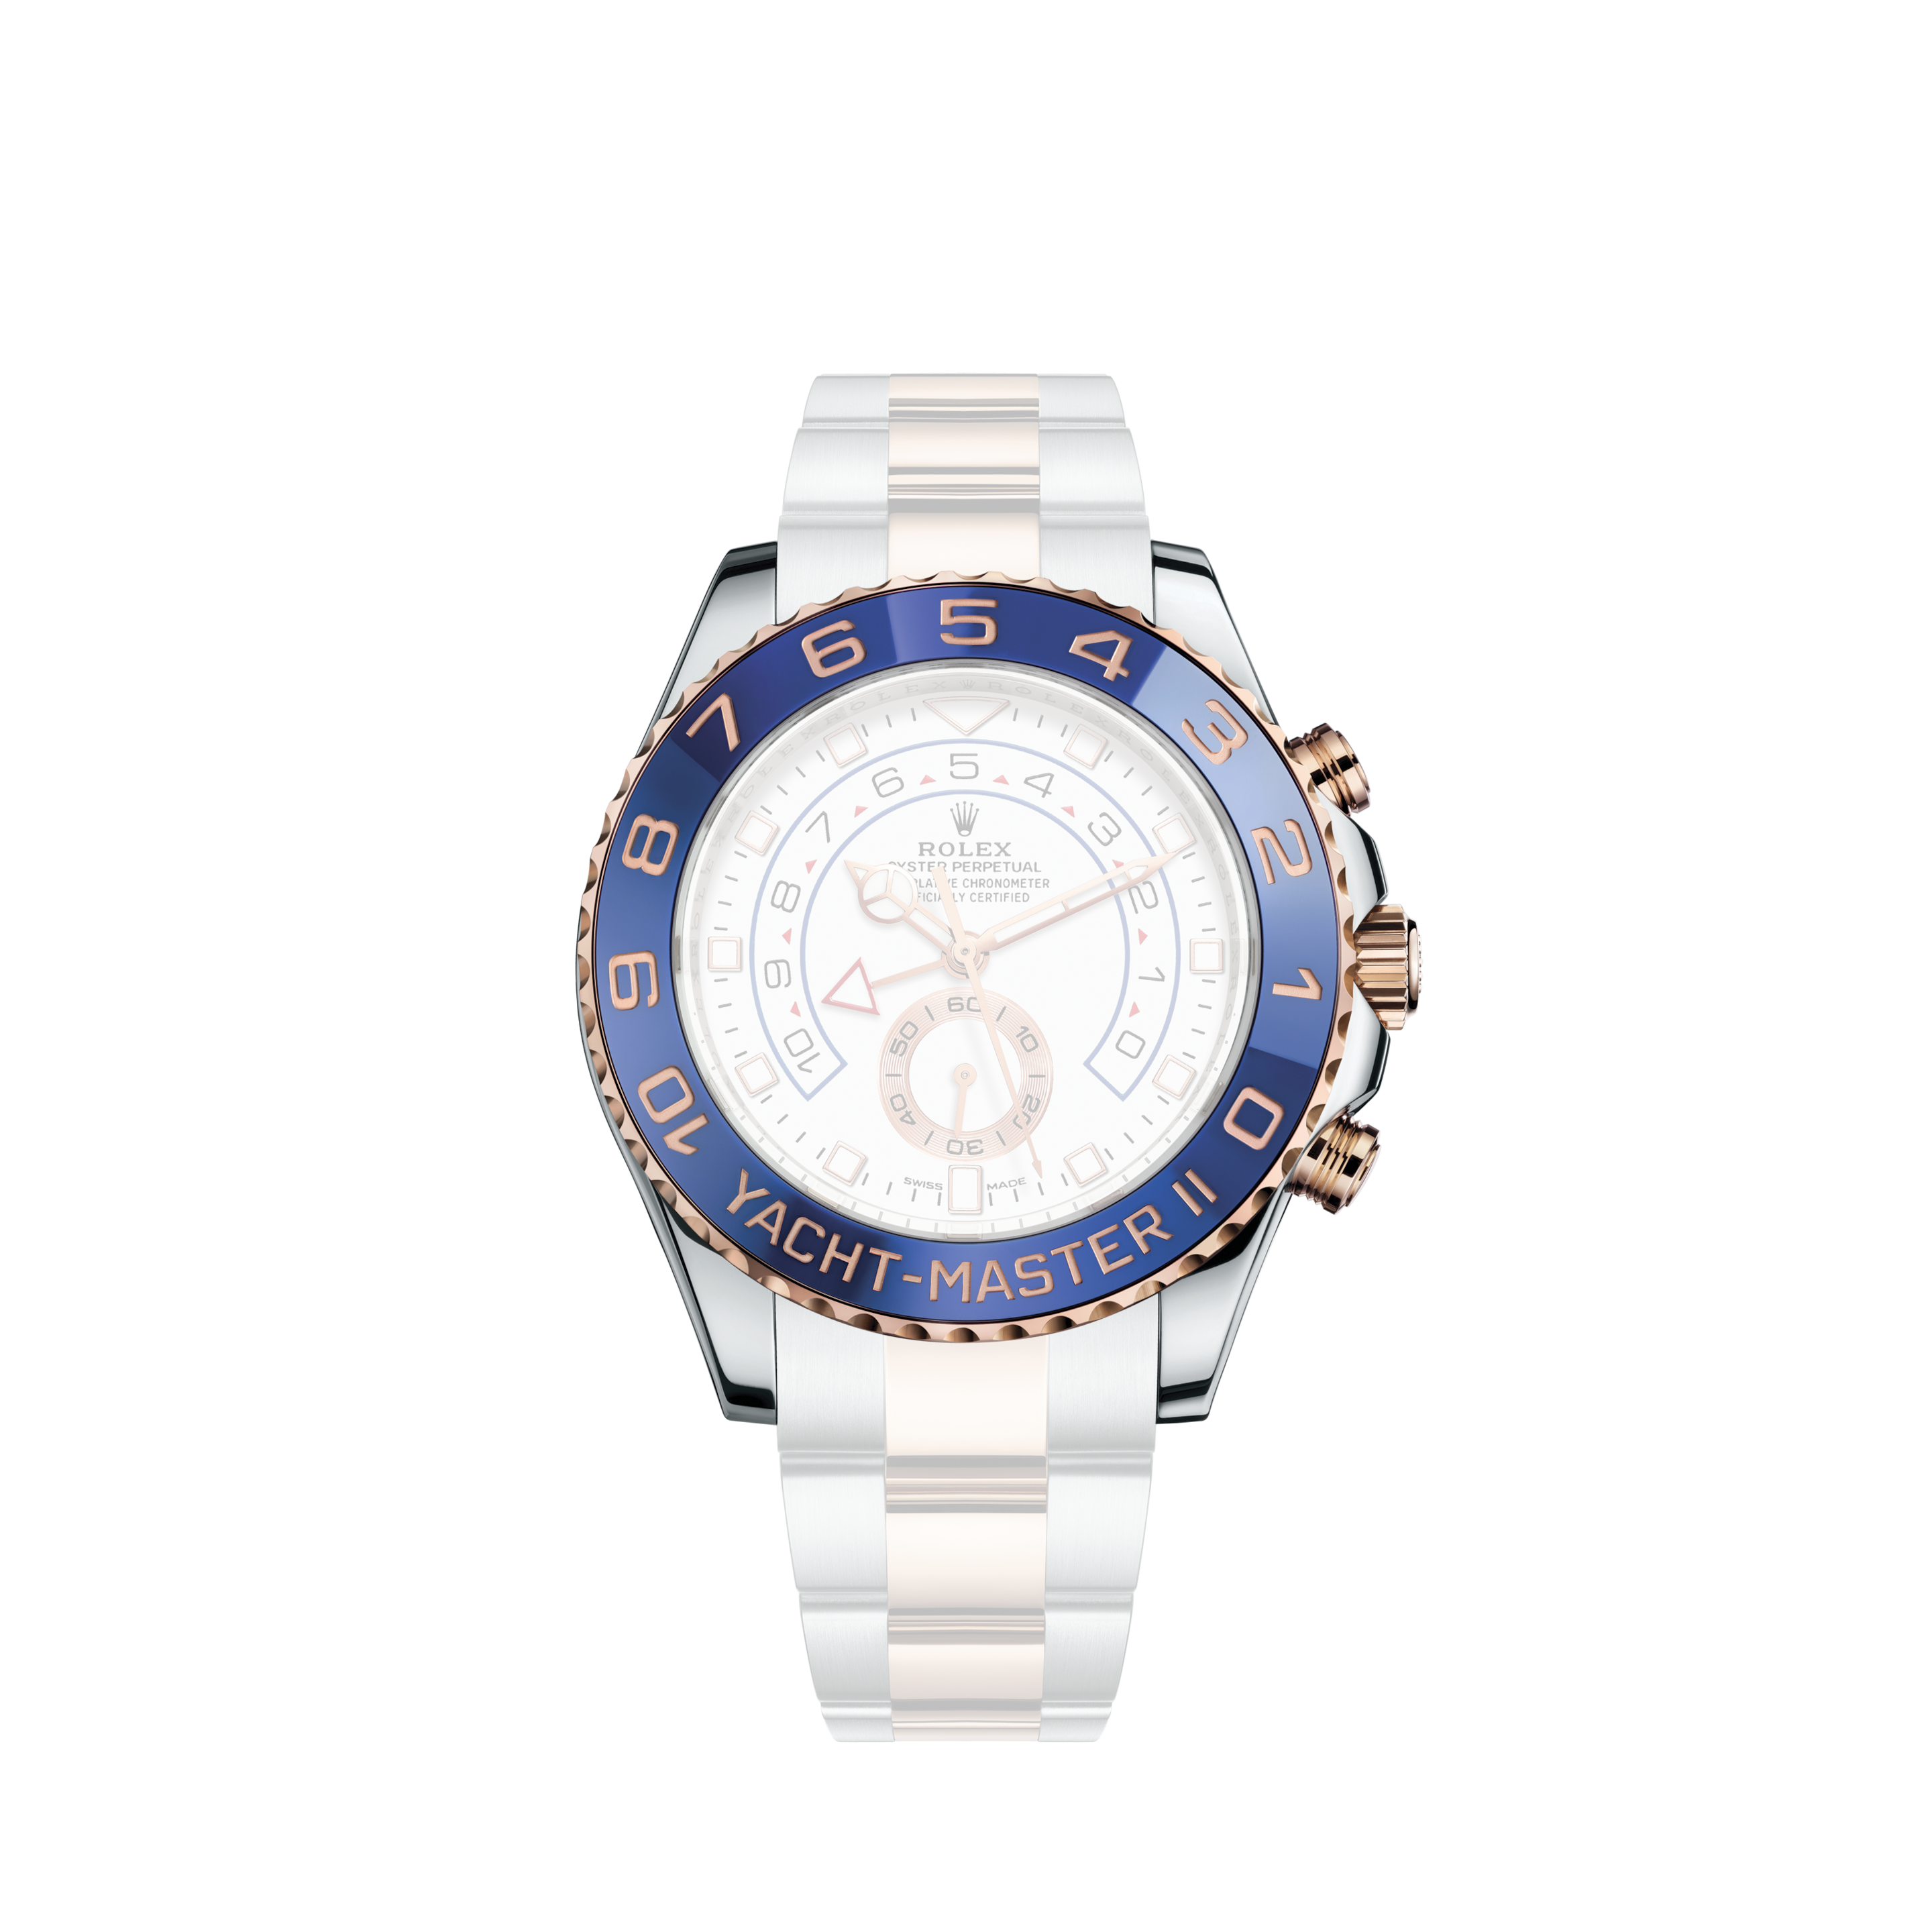 Rolex 116334 Datejust II Stainless Steel Black Roman Dial Watch